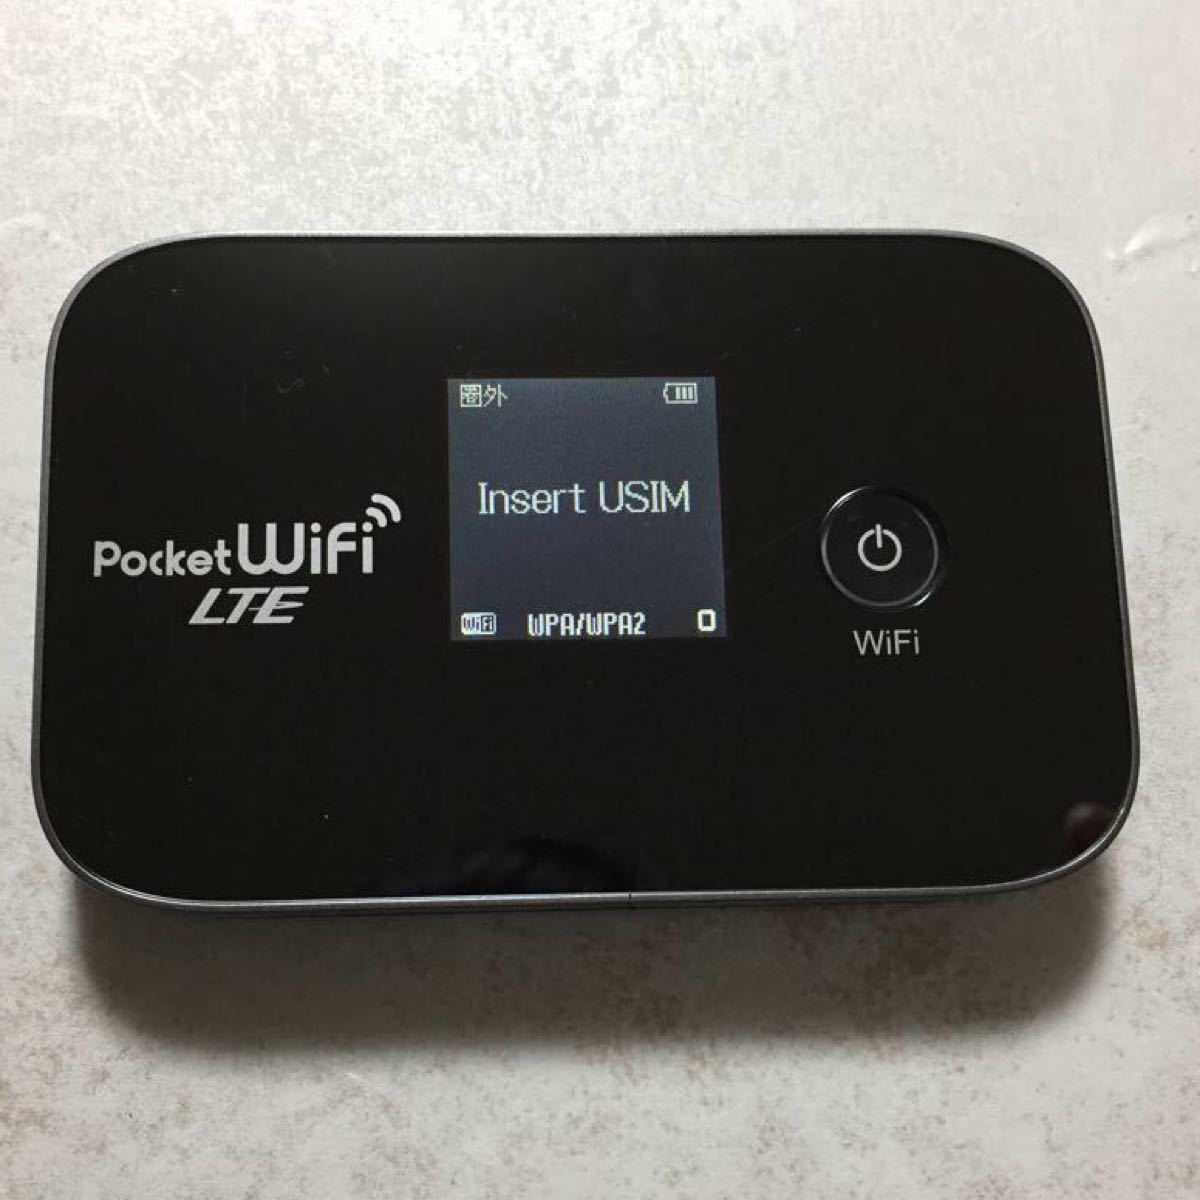 EMOBILE Pocket WiFi GL04P HUAWEI